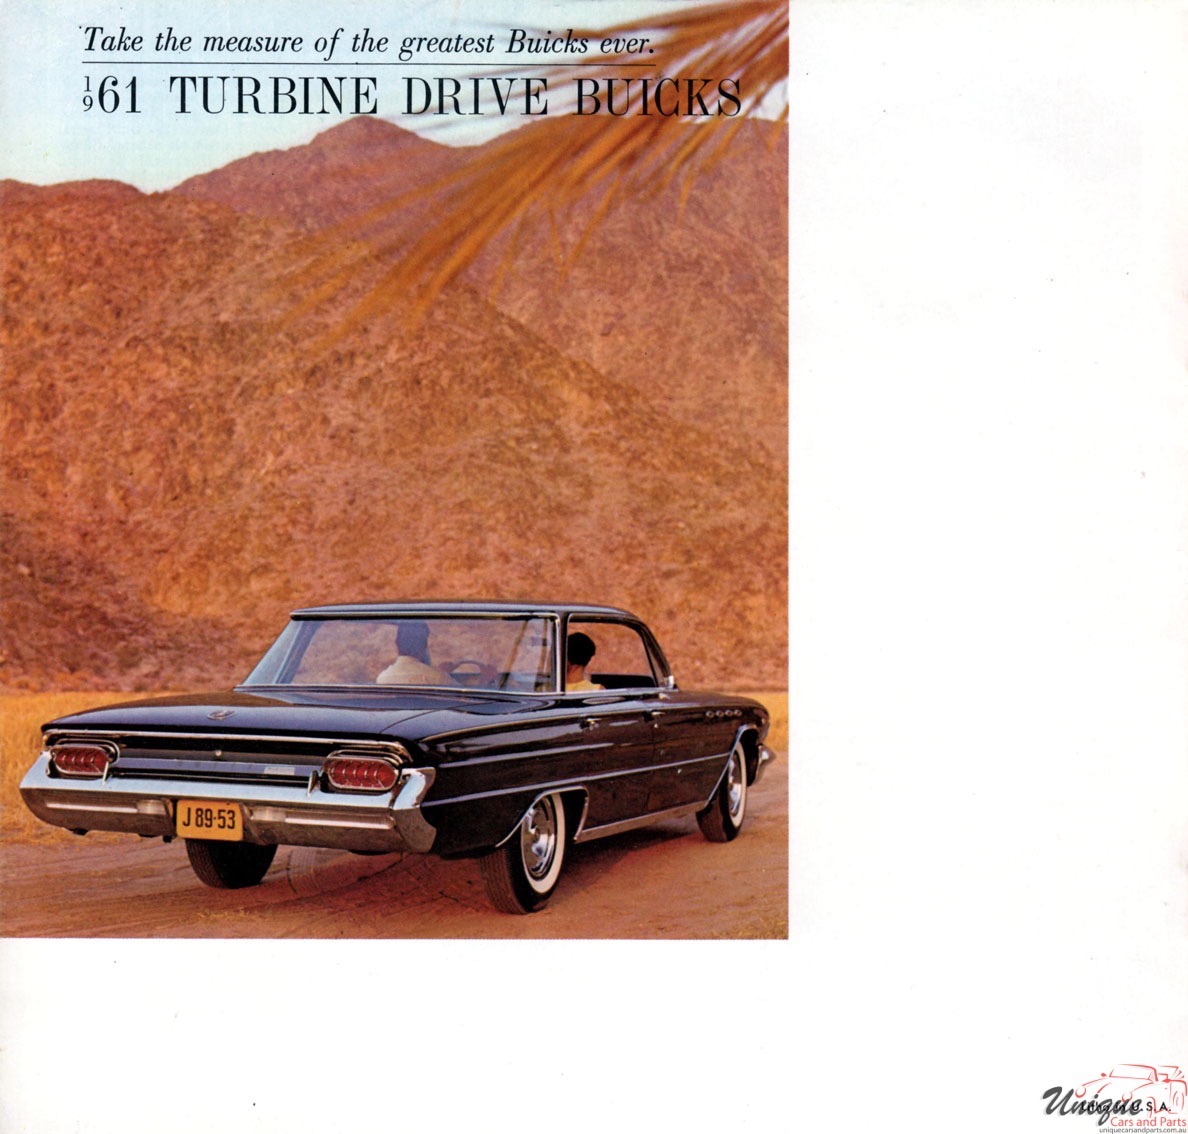 1961 Buick Full-Size Model Range Brochure Page 3